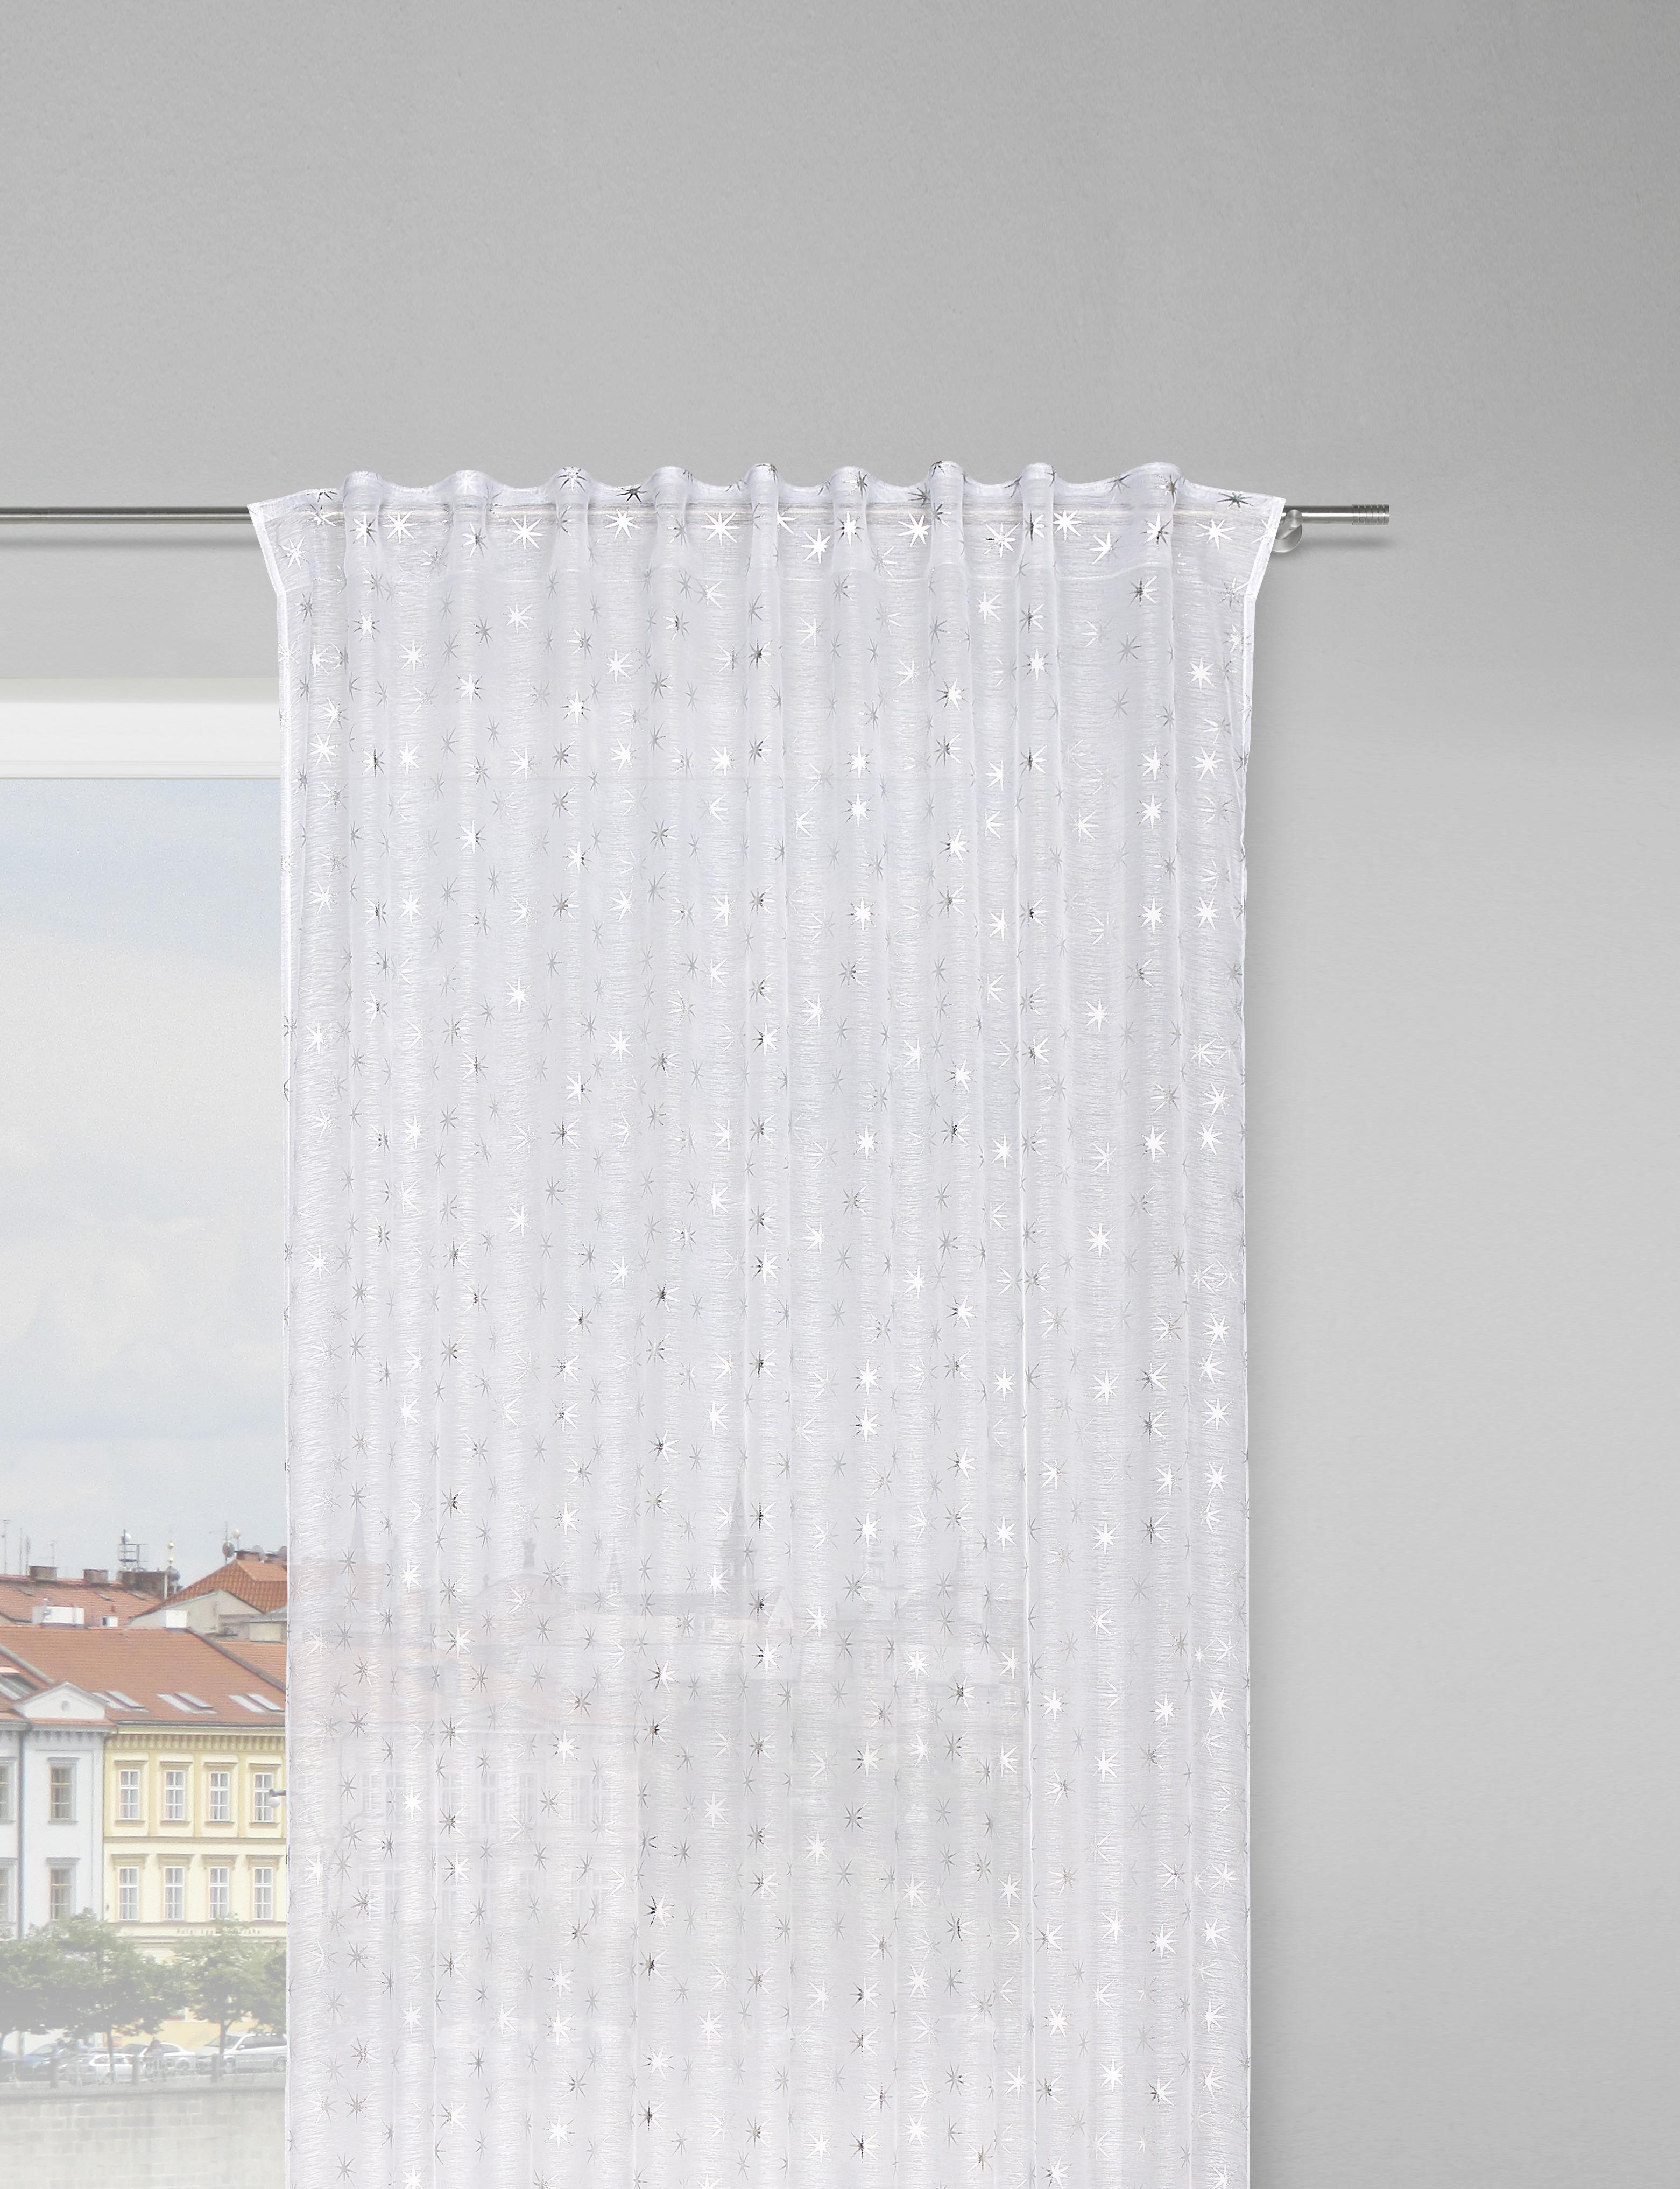 Fertigvorhang Starlight in Weiß/Silber ca. 140x245cm - Silberfarben/Weiß, Textil (140/245cm) - Modern Living